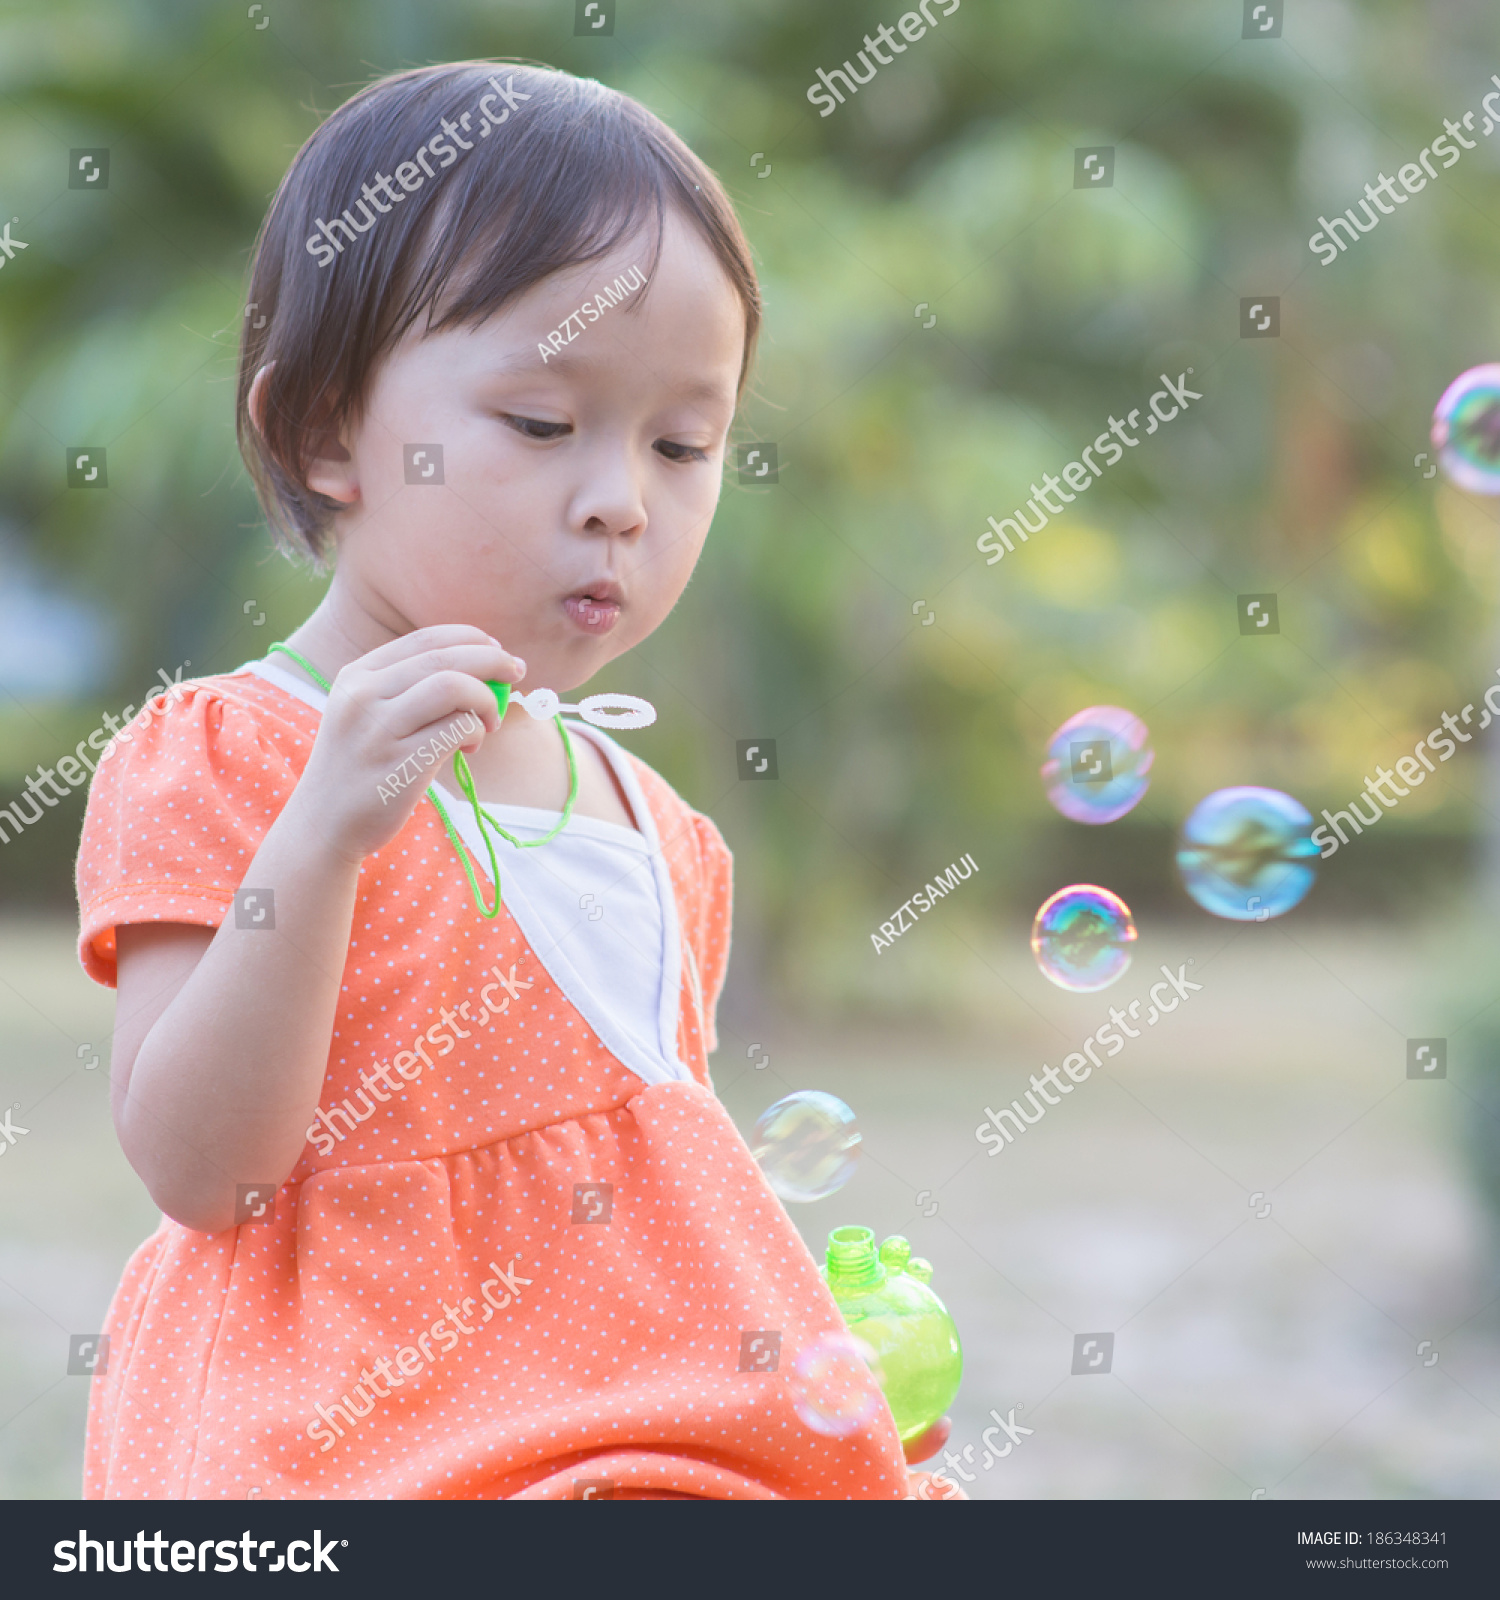 Cute Small Asian Girl Soap Bubble库存照片186348341 Shutterstock